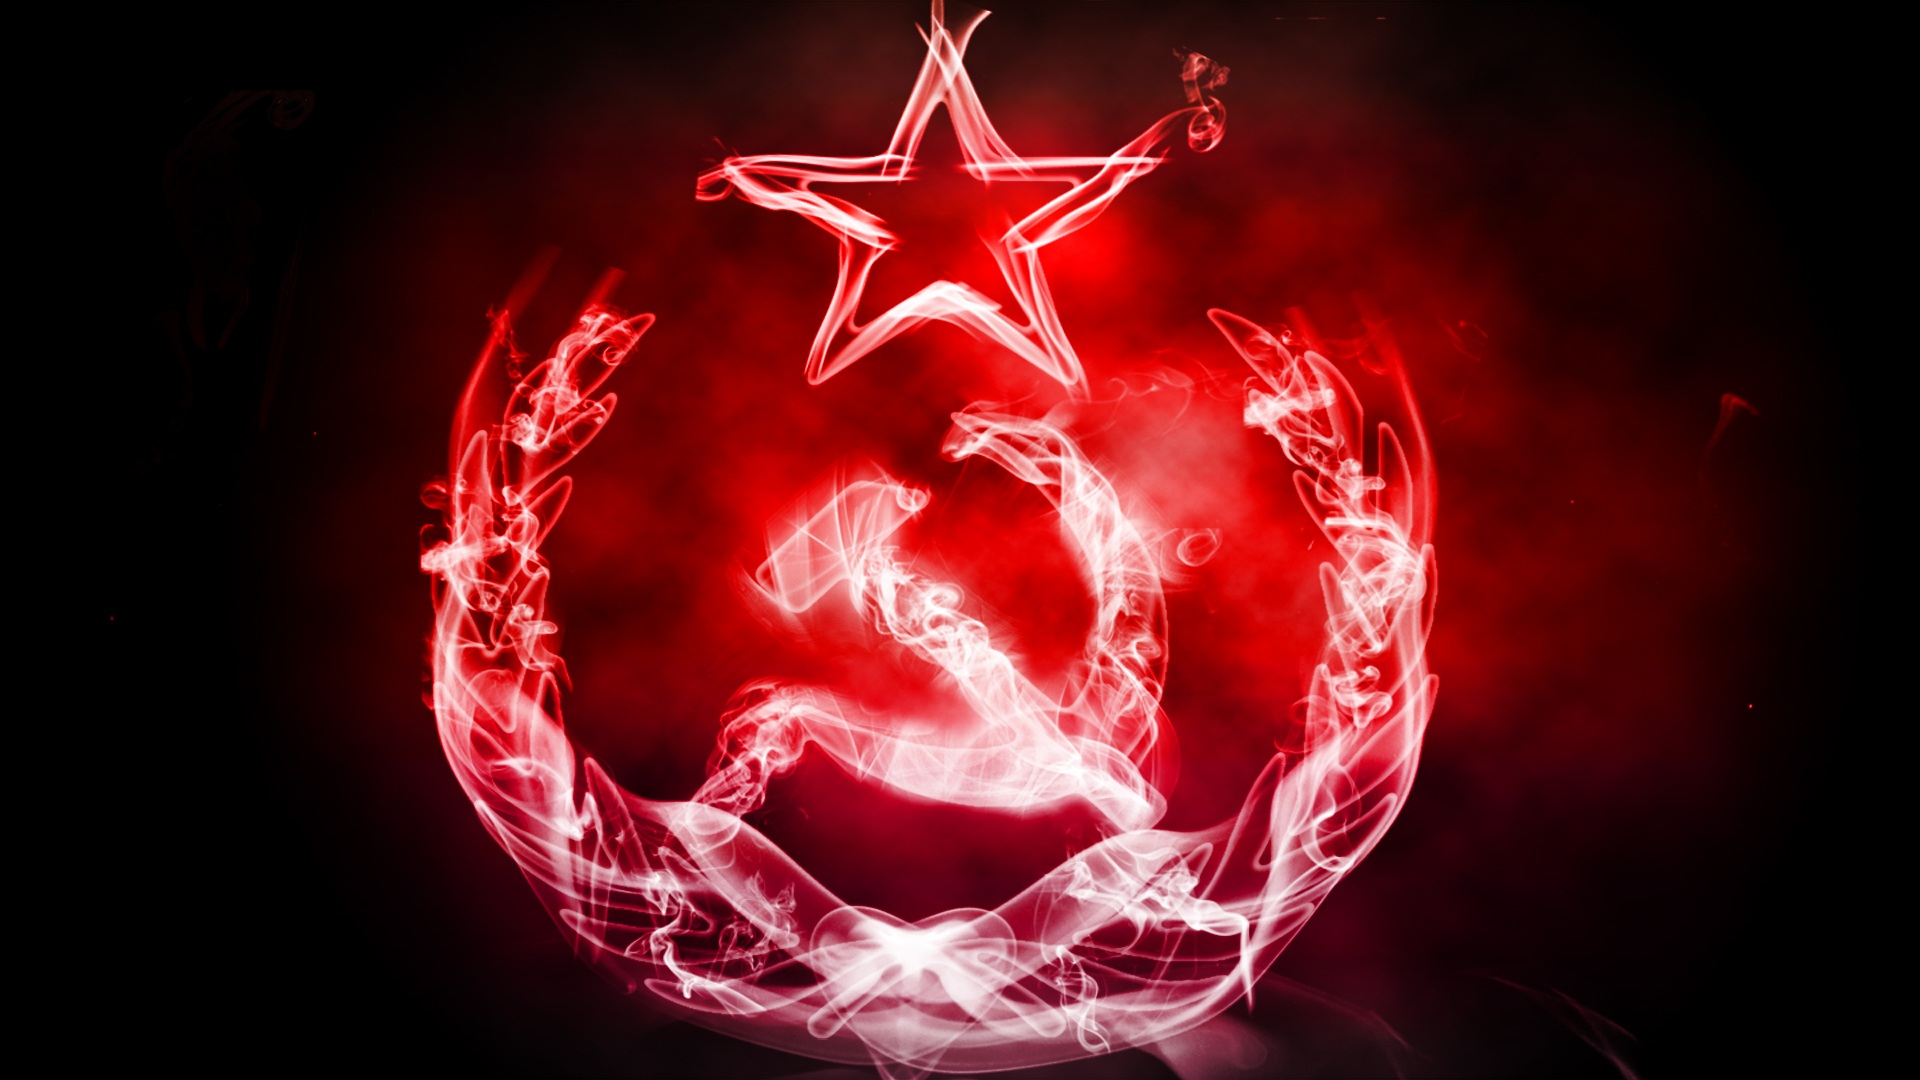 Communism Russia CCCP USSR wallpaper 1920x1080 214256